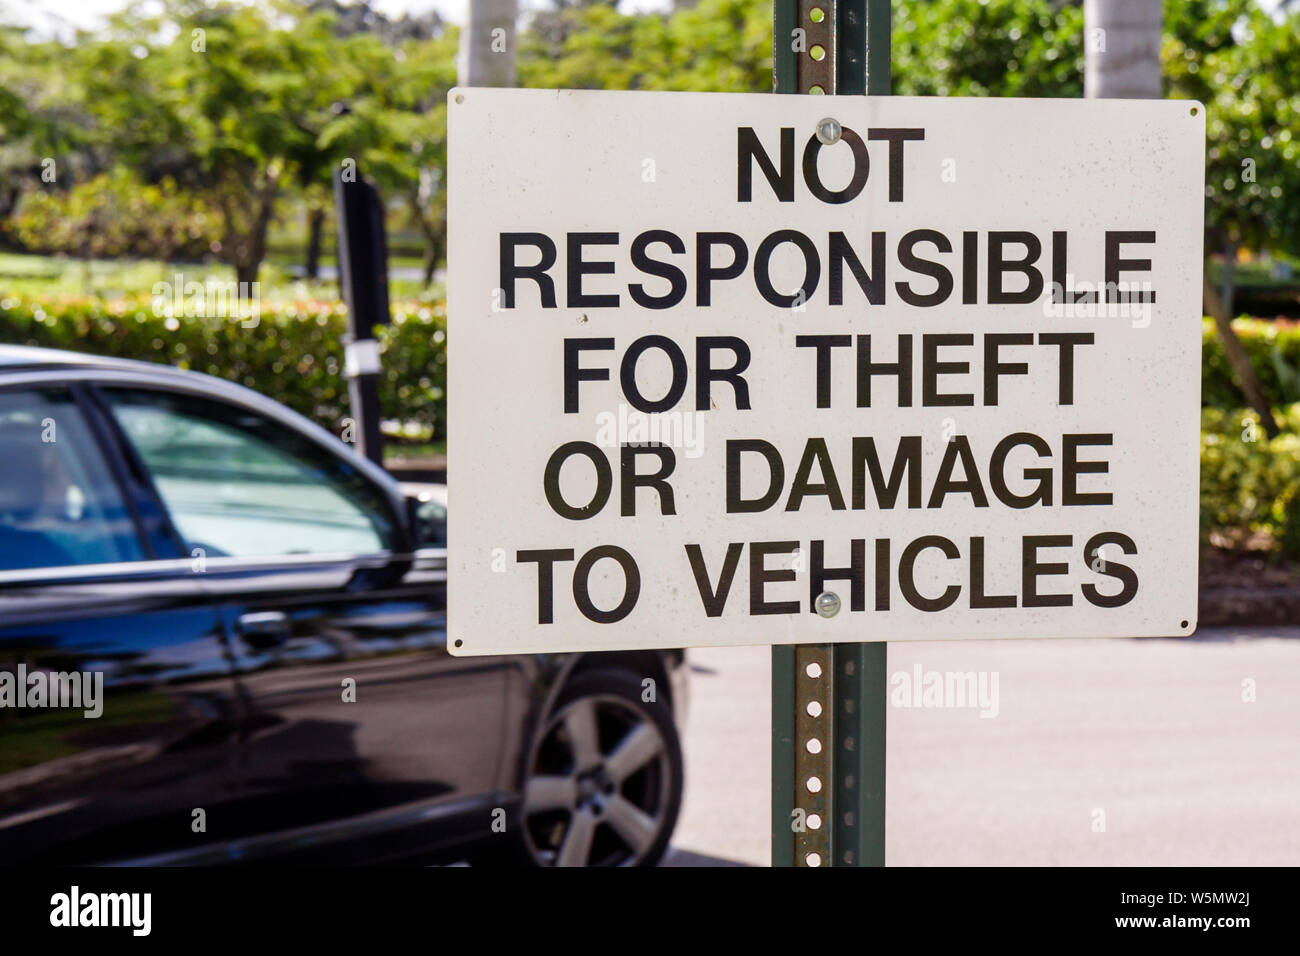 Florida,Broward,Fort Ft. Lauderdale,Coral Springs,parking lot,sign,warning,disclaimer,not responsible for theft,damage,car,FL091213044 Stock Photo